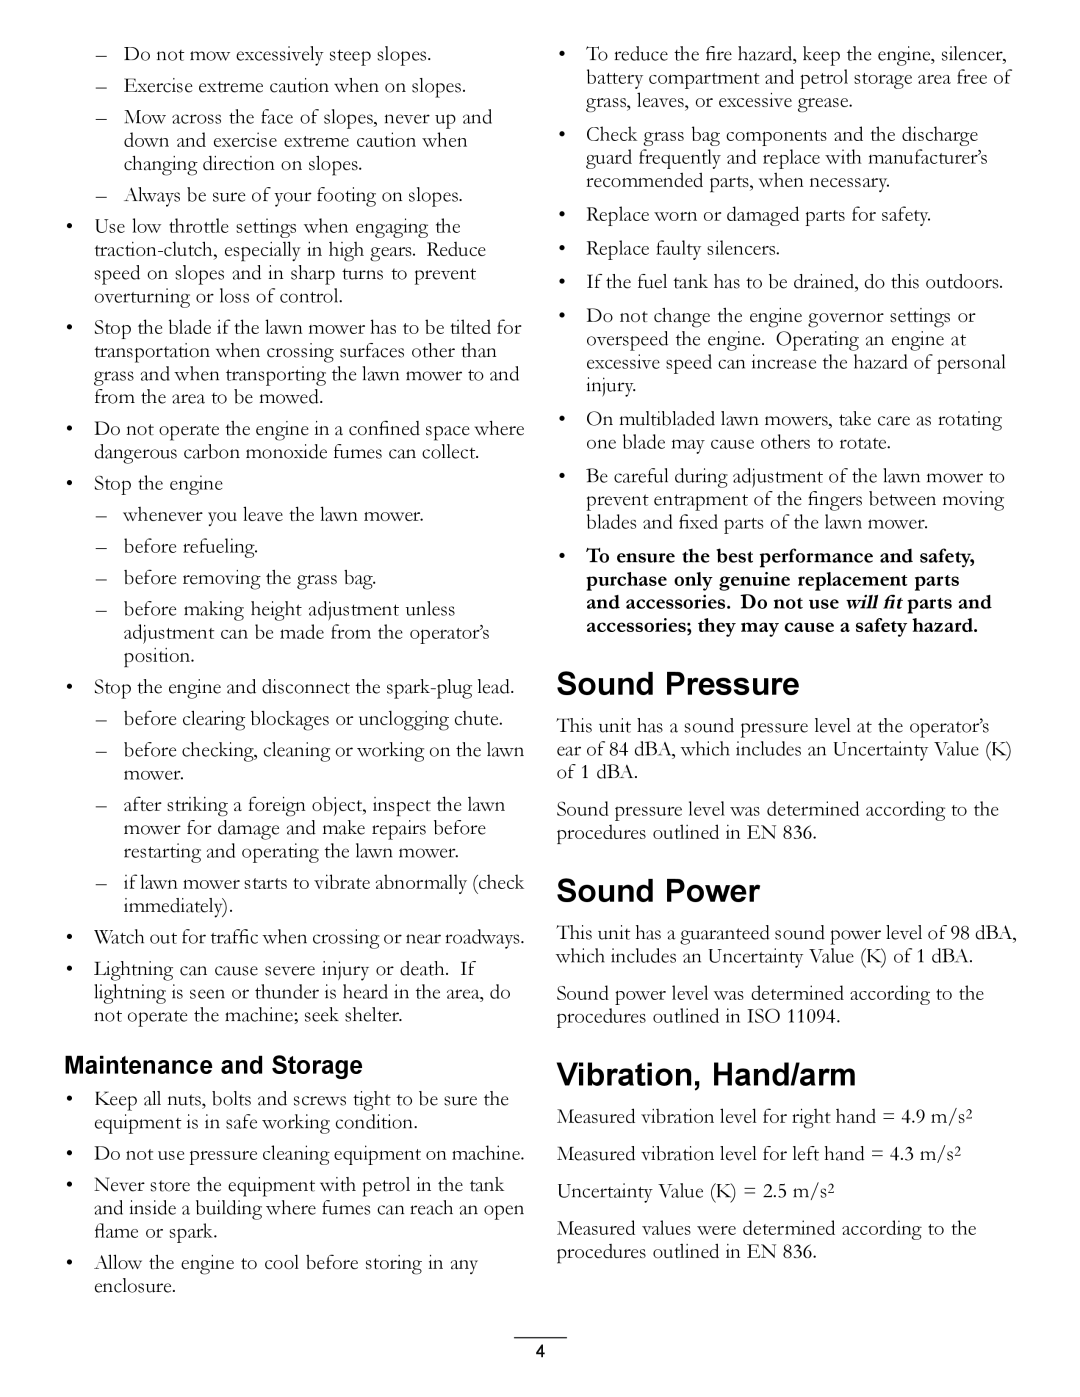 Hayter Mowers 447F manual Sound Pressure, Sound Power, Vibration, Hand/arm, Maintenance and Storage 